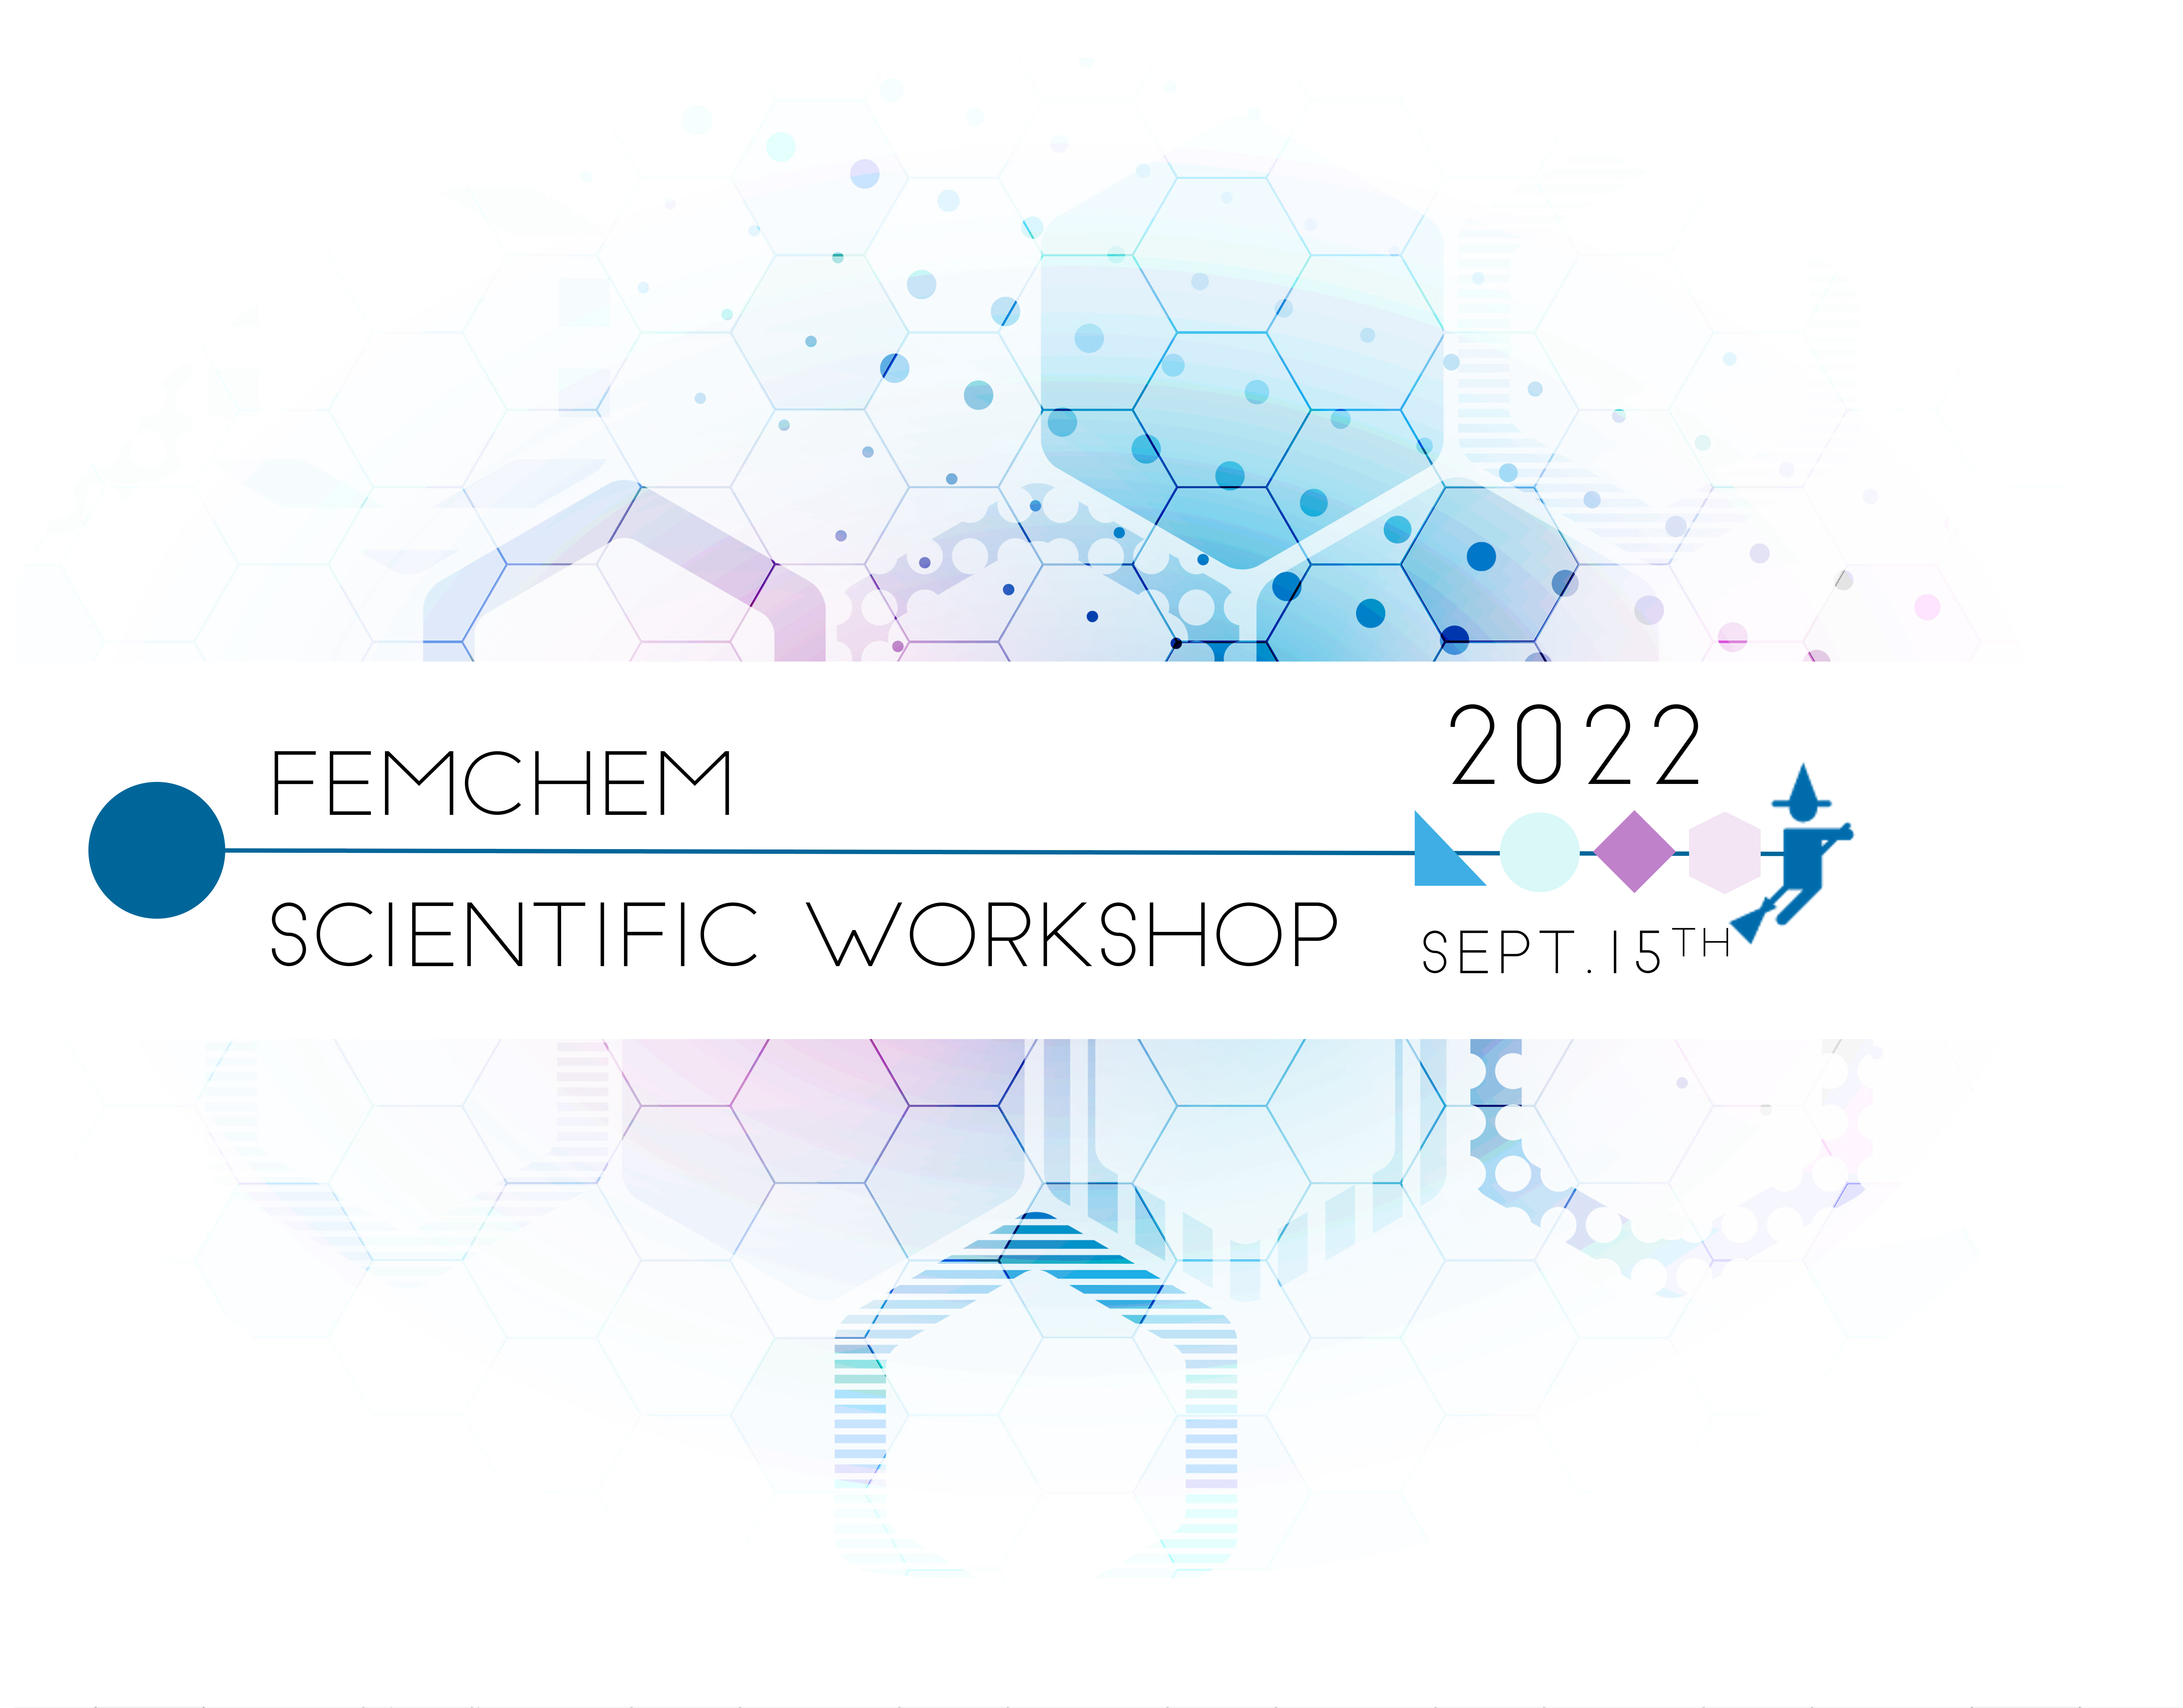 Scientific Workshop Femchem